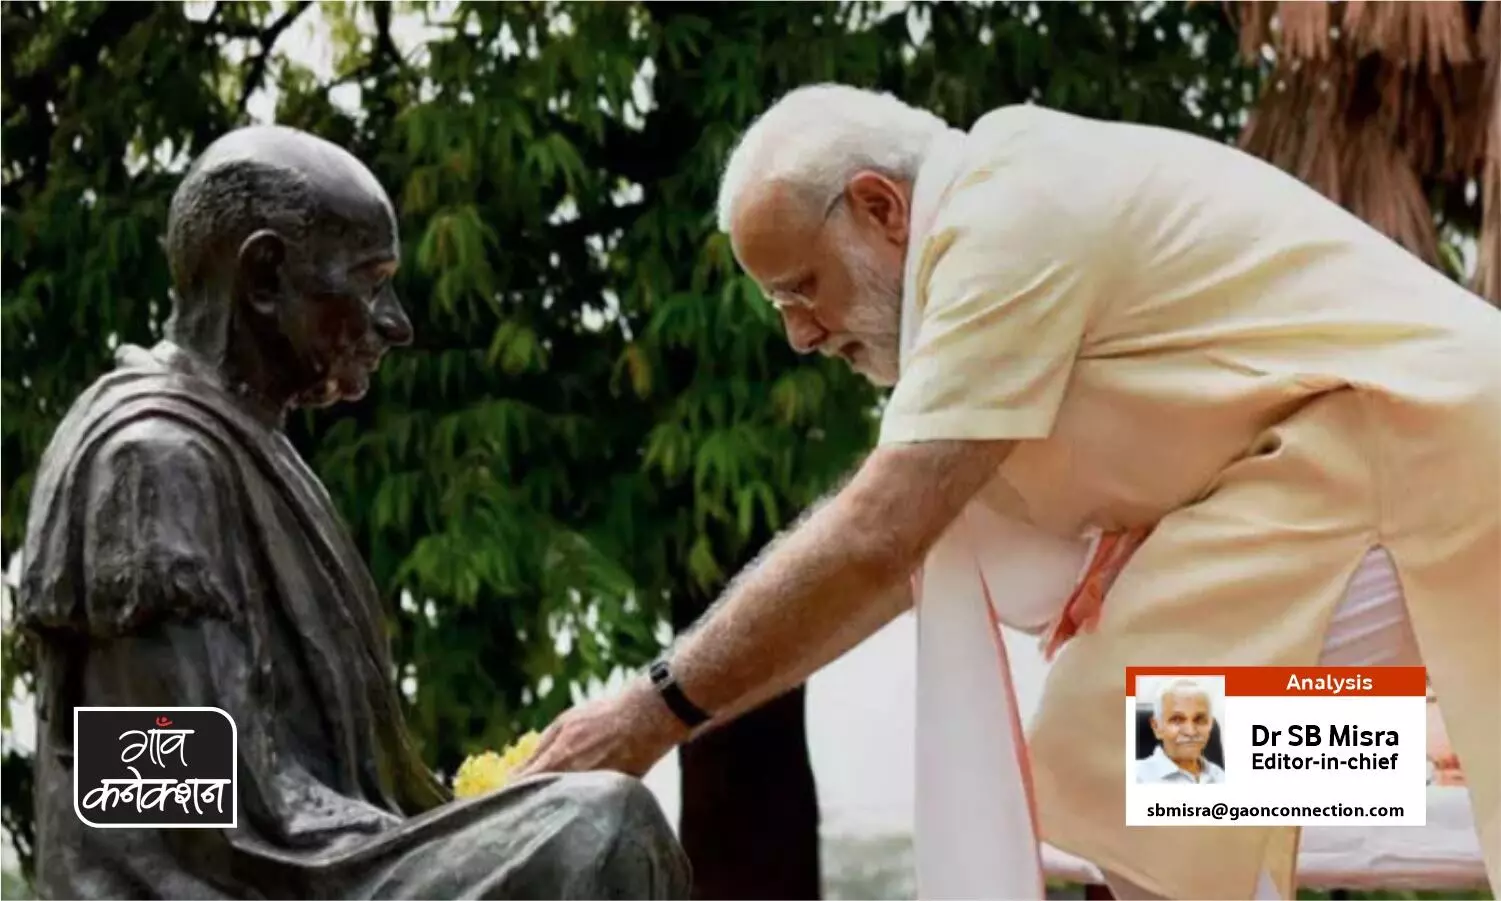 Only Narendra Modi has truly understood Mahatma Gandhi